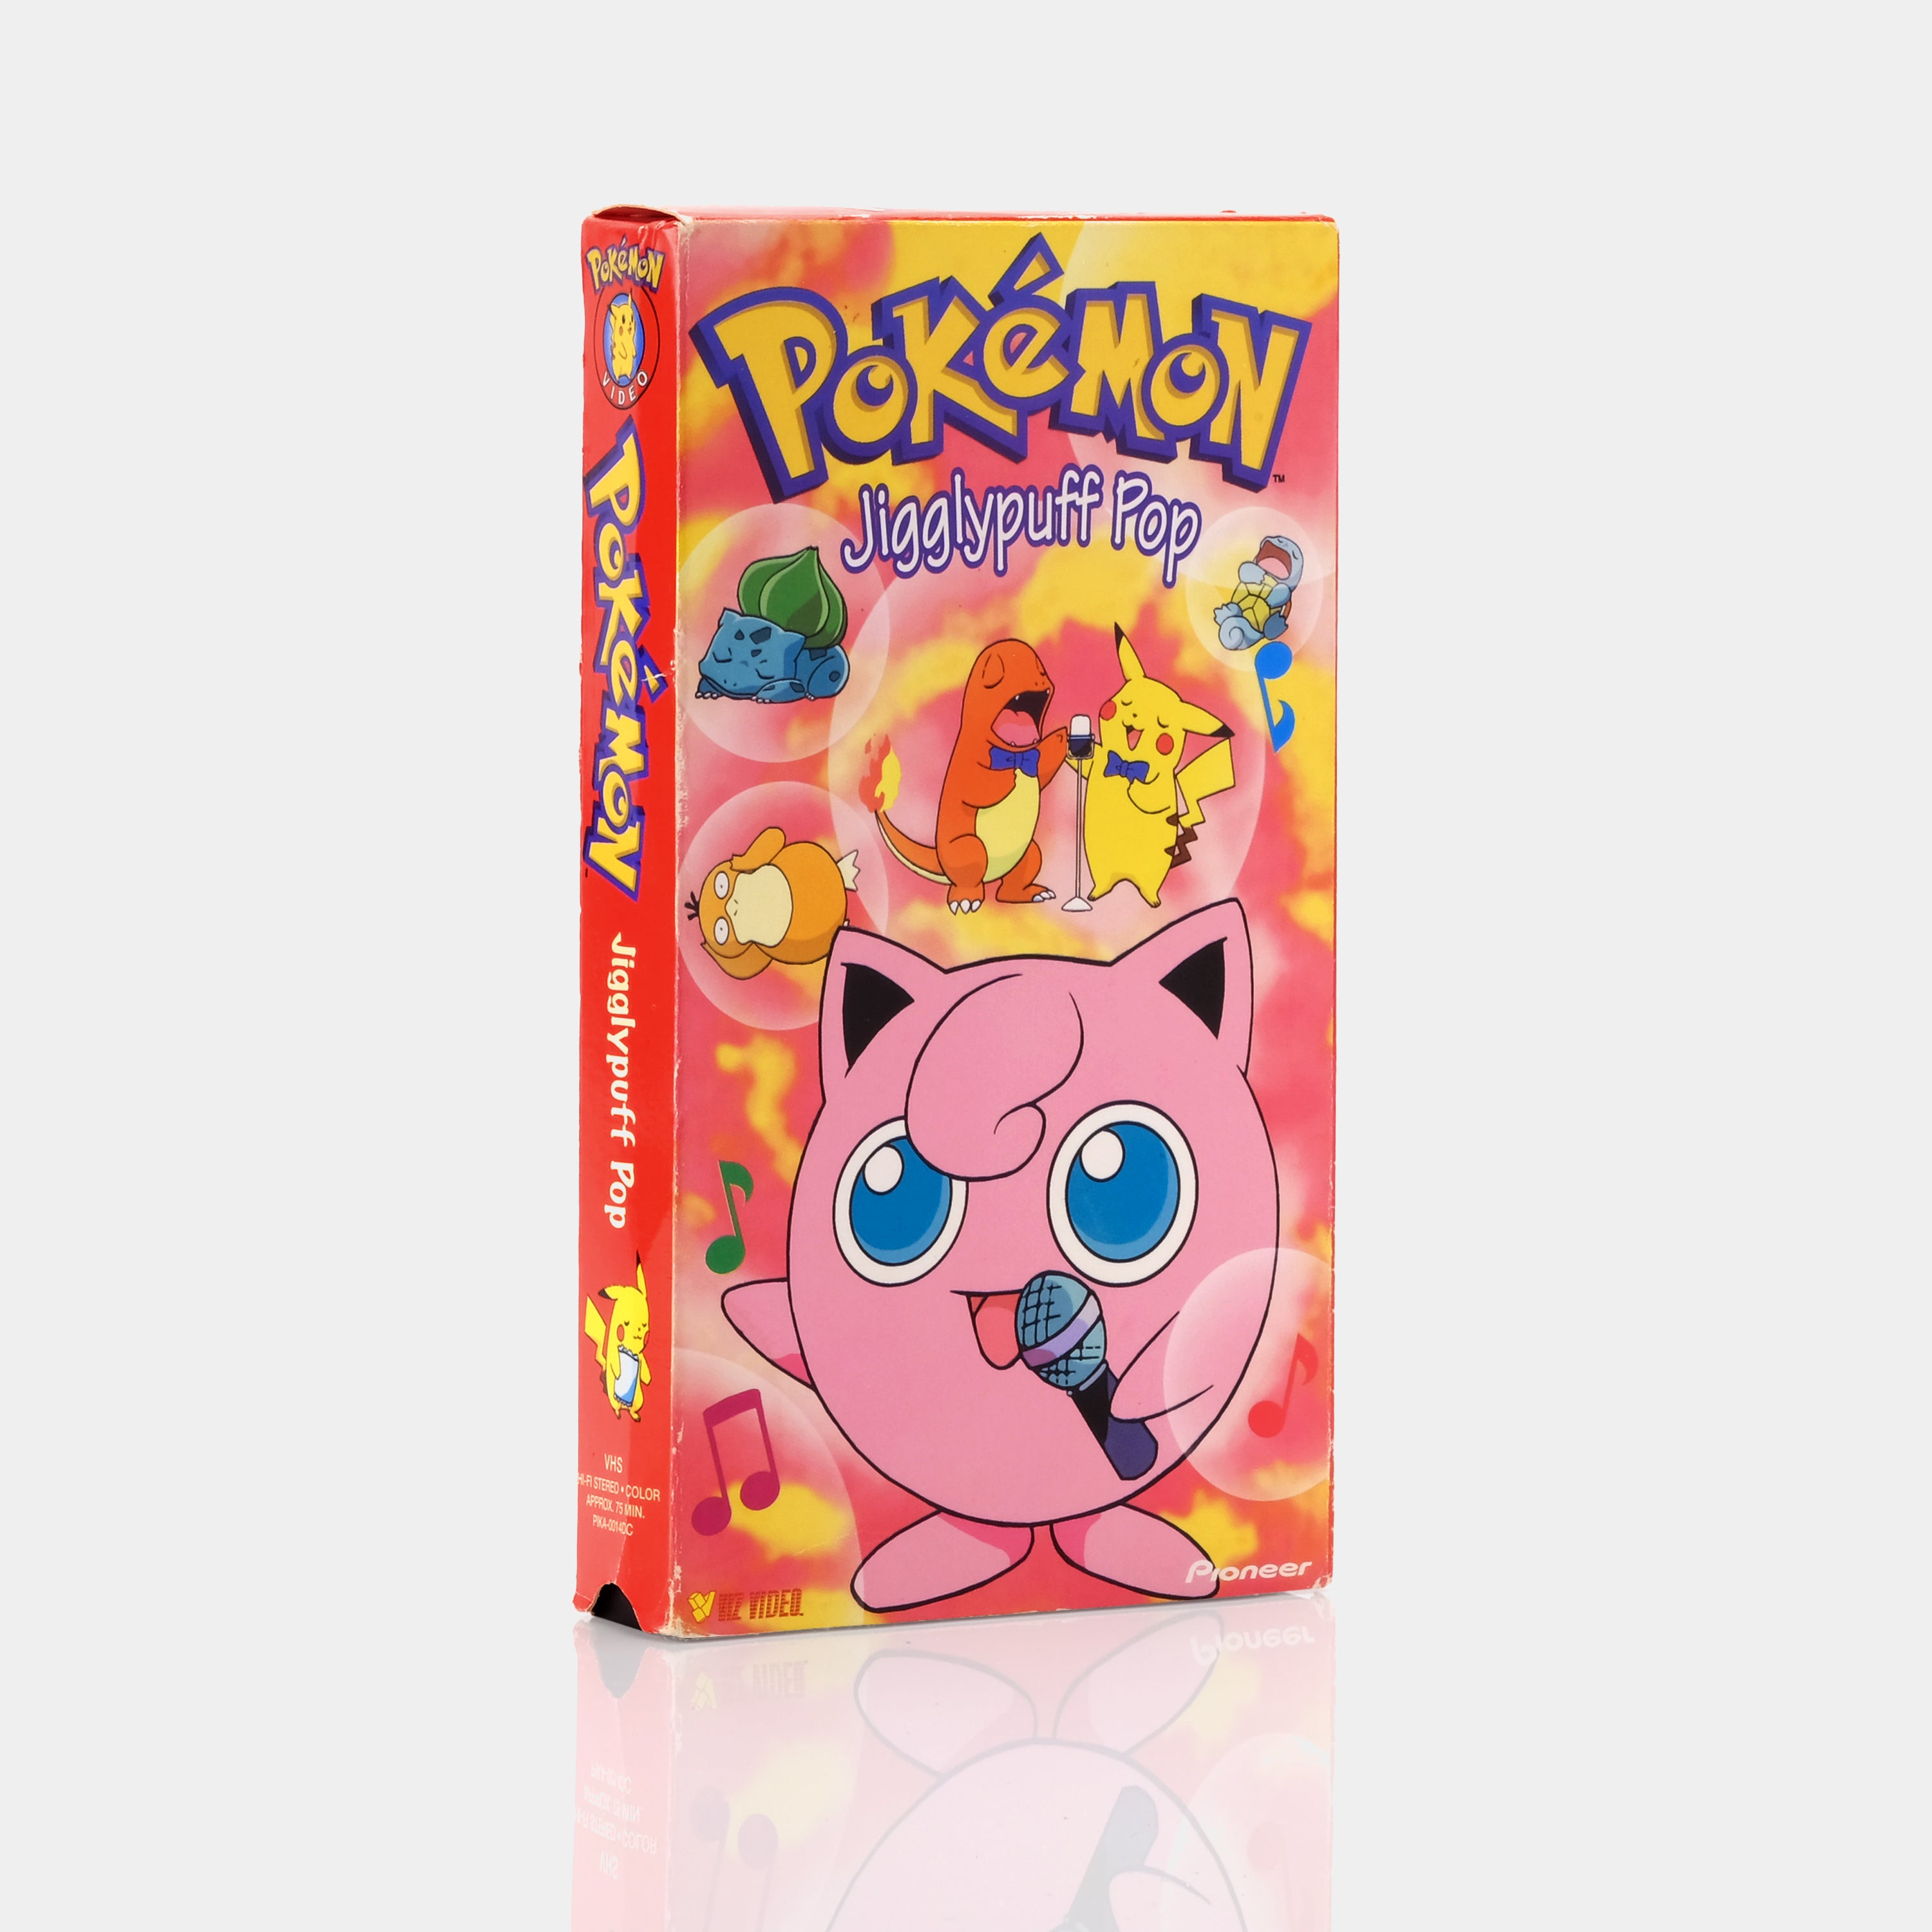 Pokémon: Jigglypuff Pop VHS Tape